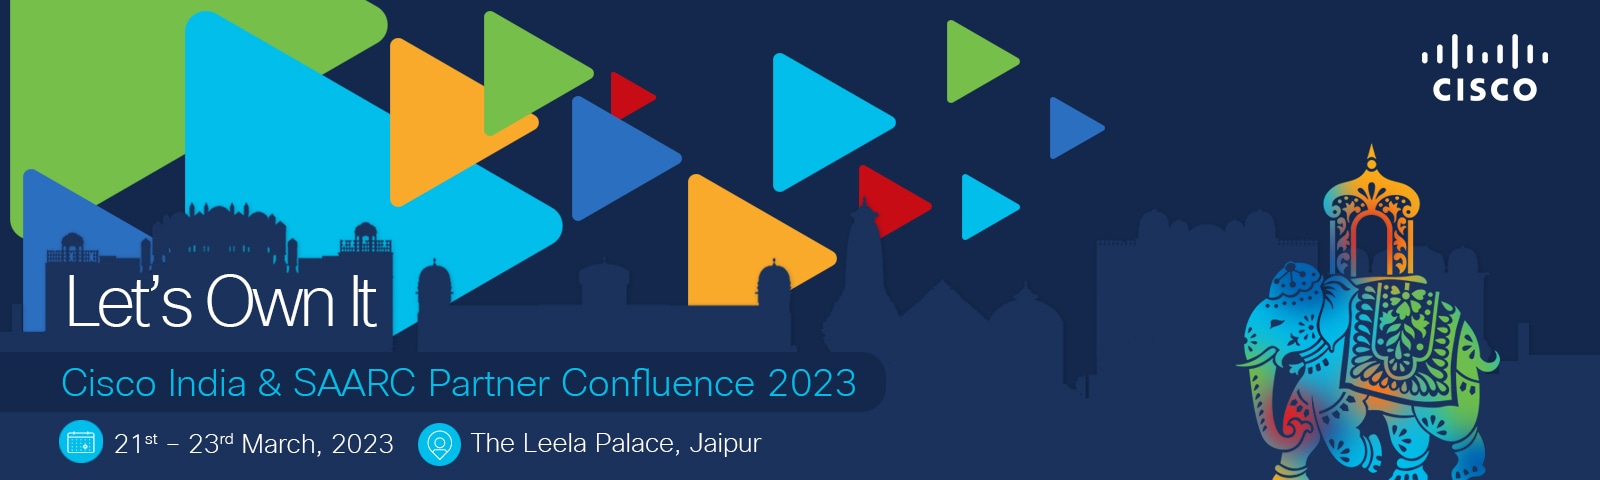 Cisco India & SAARC Partner Confluence 2023